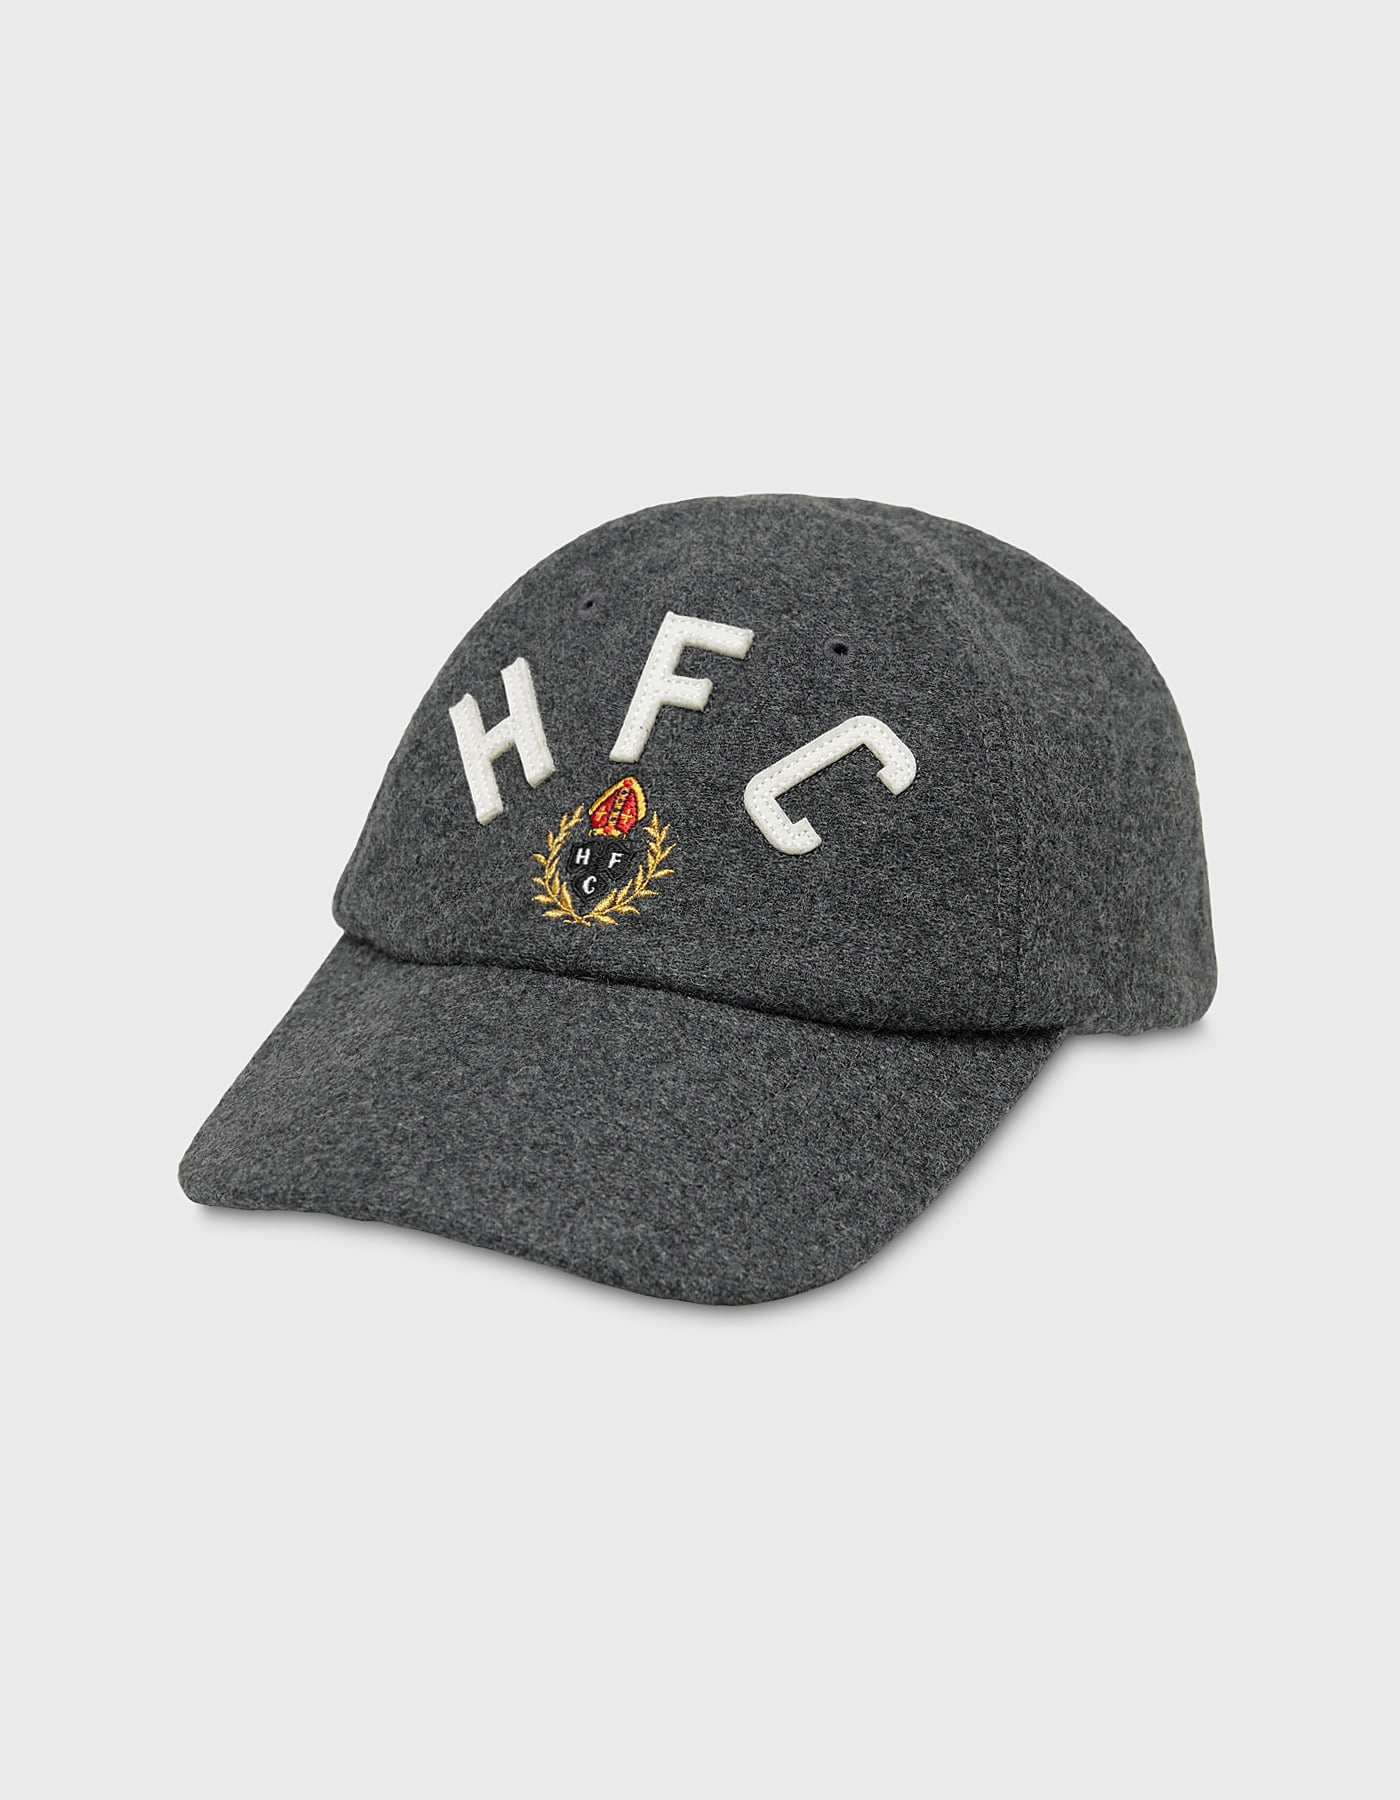 HFC CREST FELT WOOL CAP / Grey